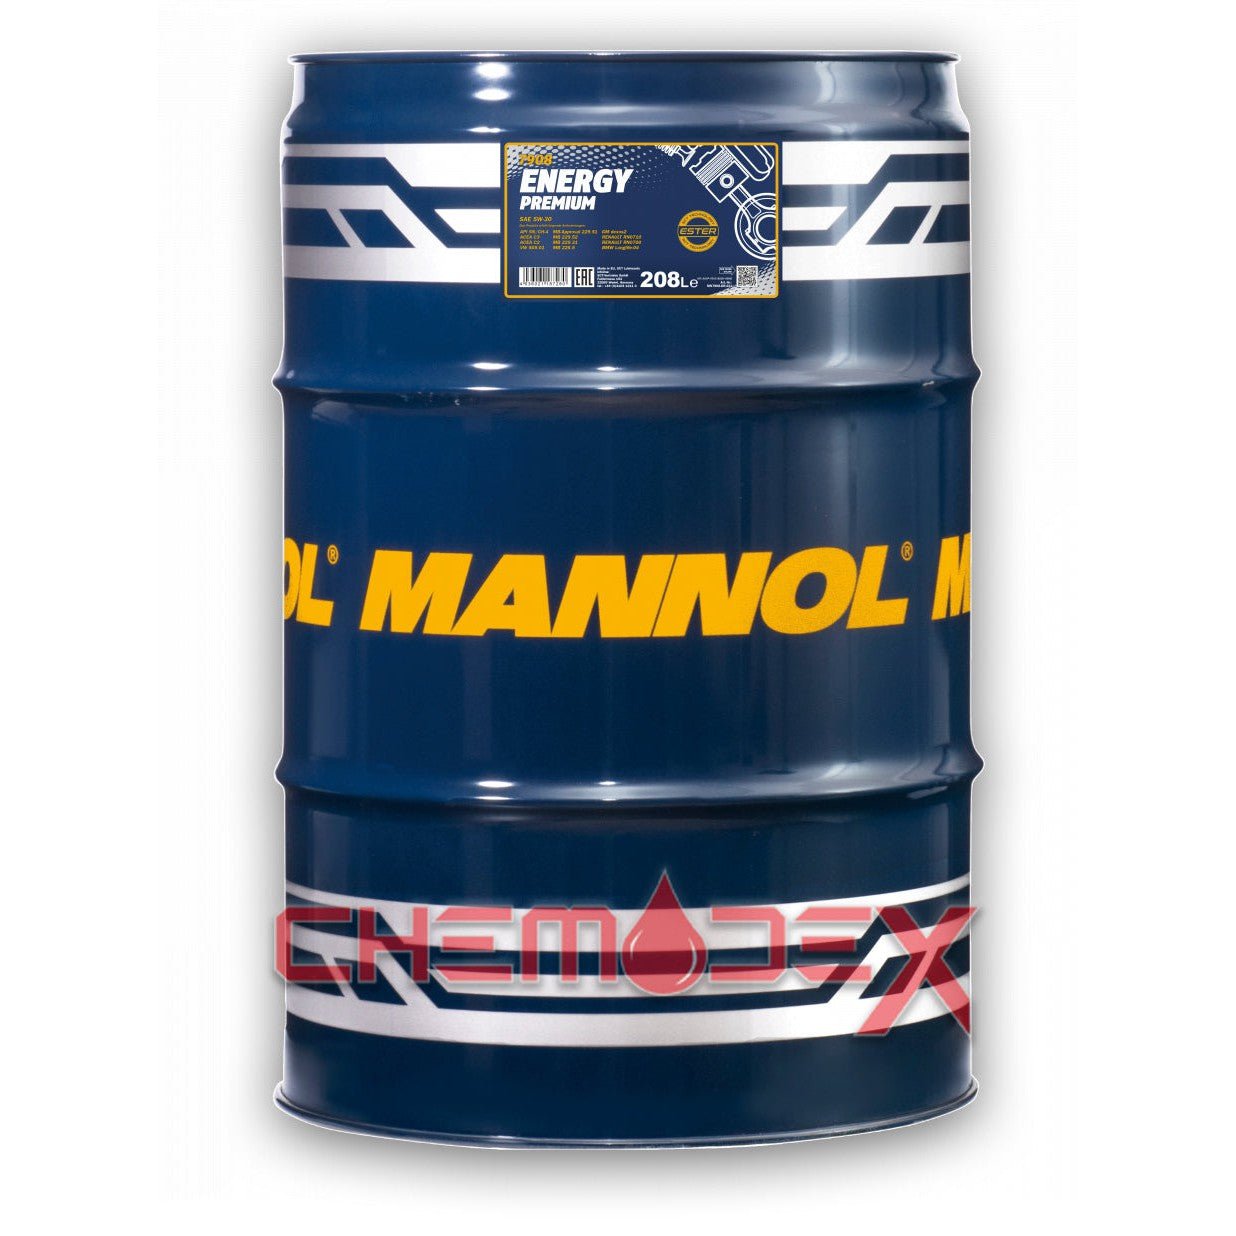 MANNOL Energy 5W 30 Engine Oil 5 Liter 5W30 Oil